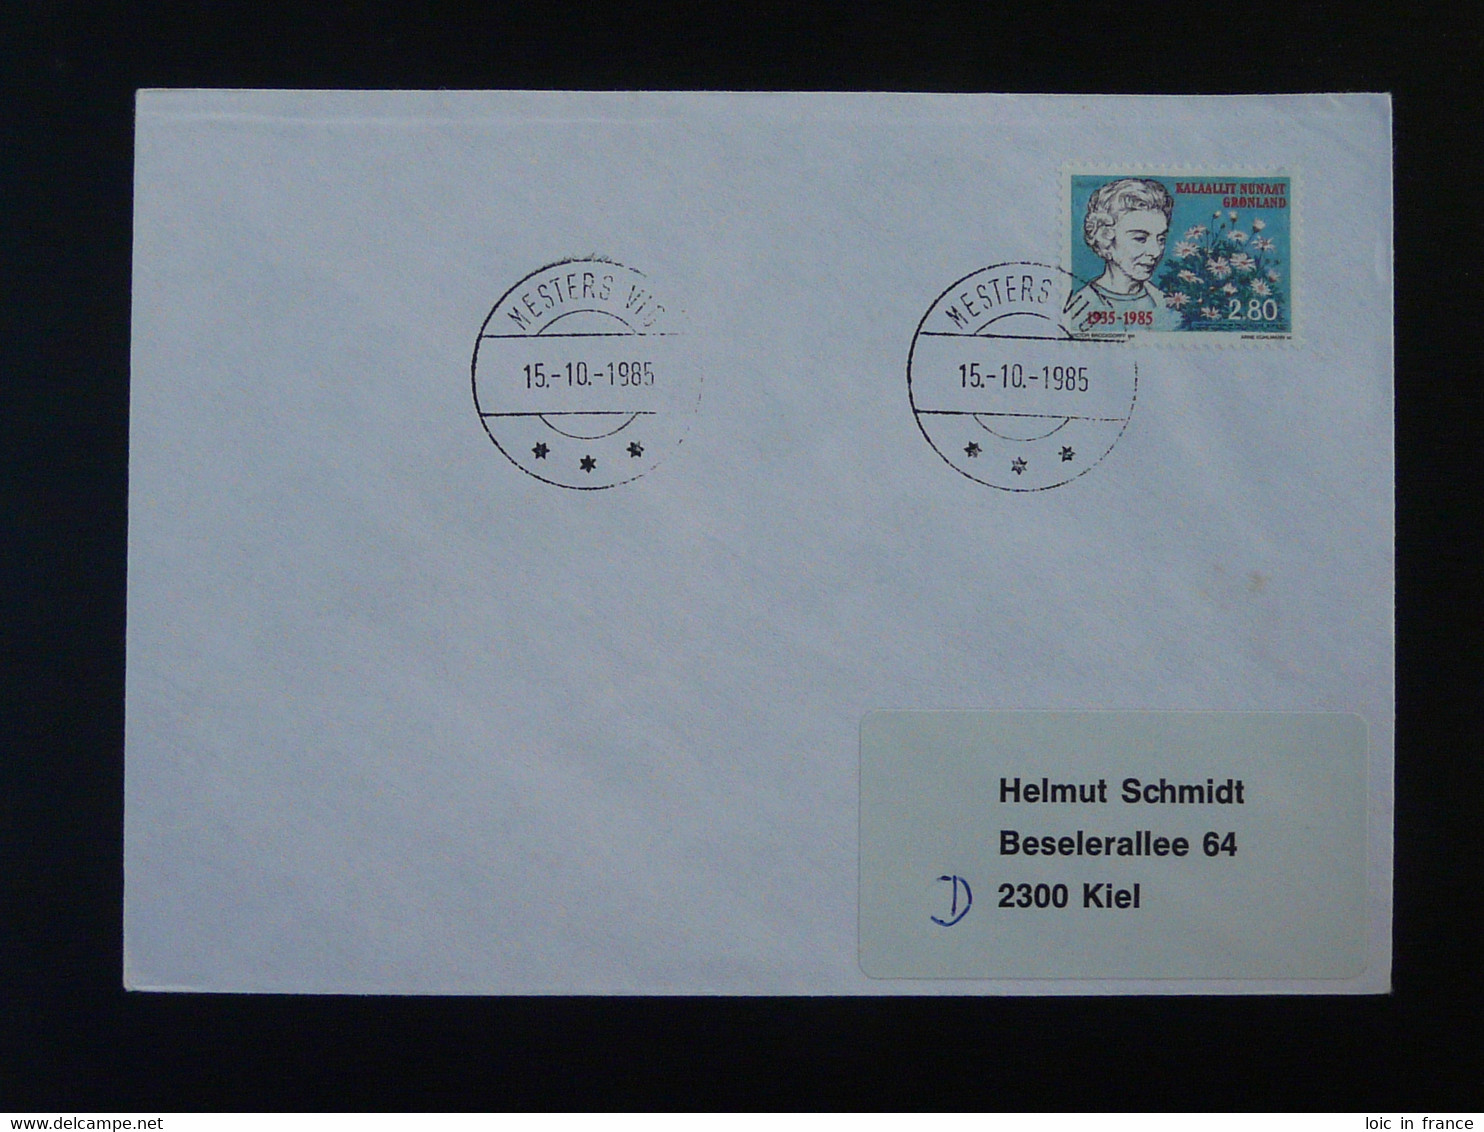 Lettre Cover Obliteration Postmark Mesters Vig Groenland Greenland 1985 (ex 1) - Poststempel